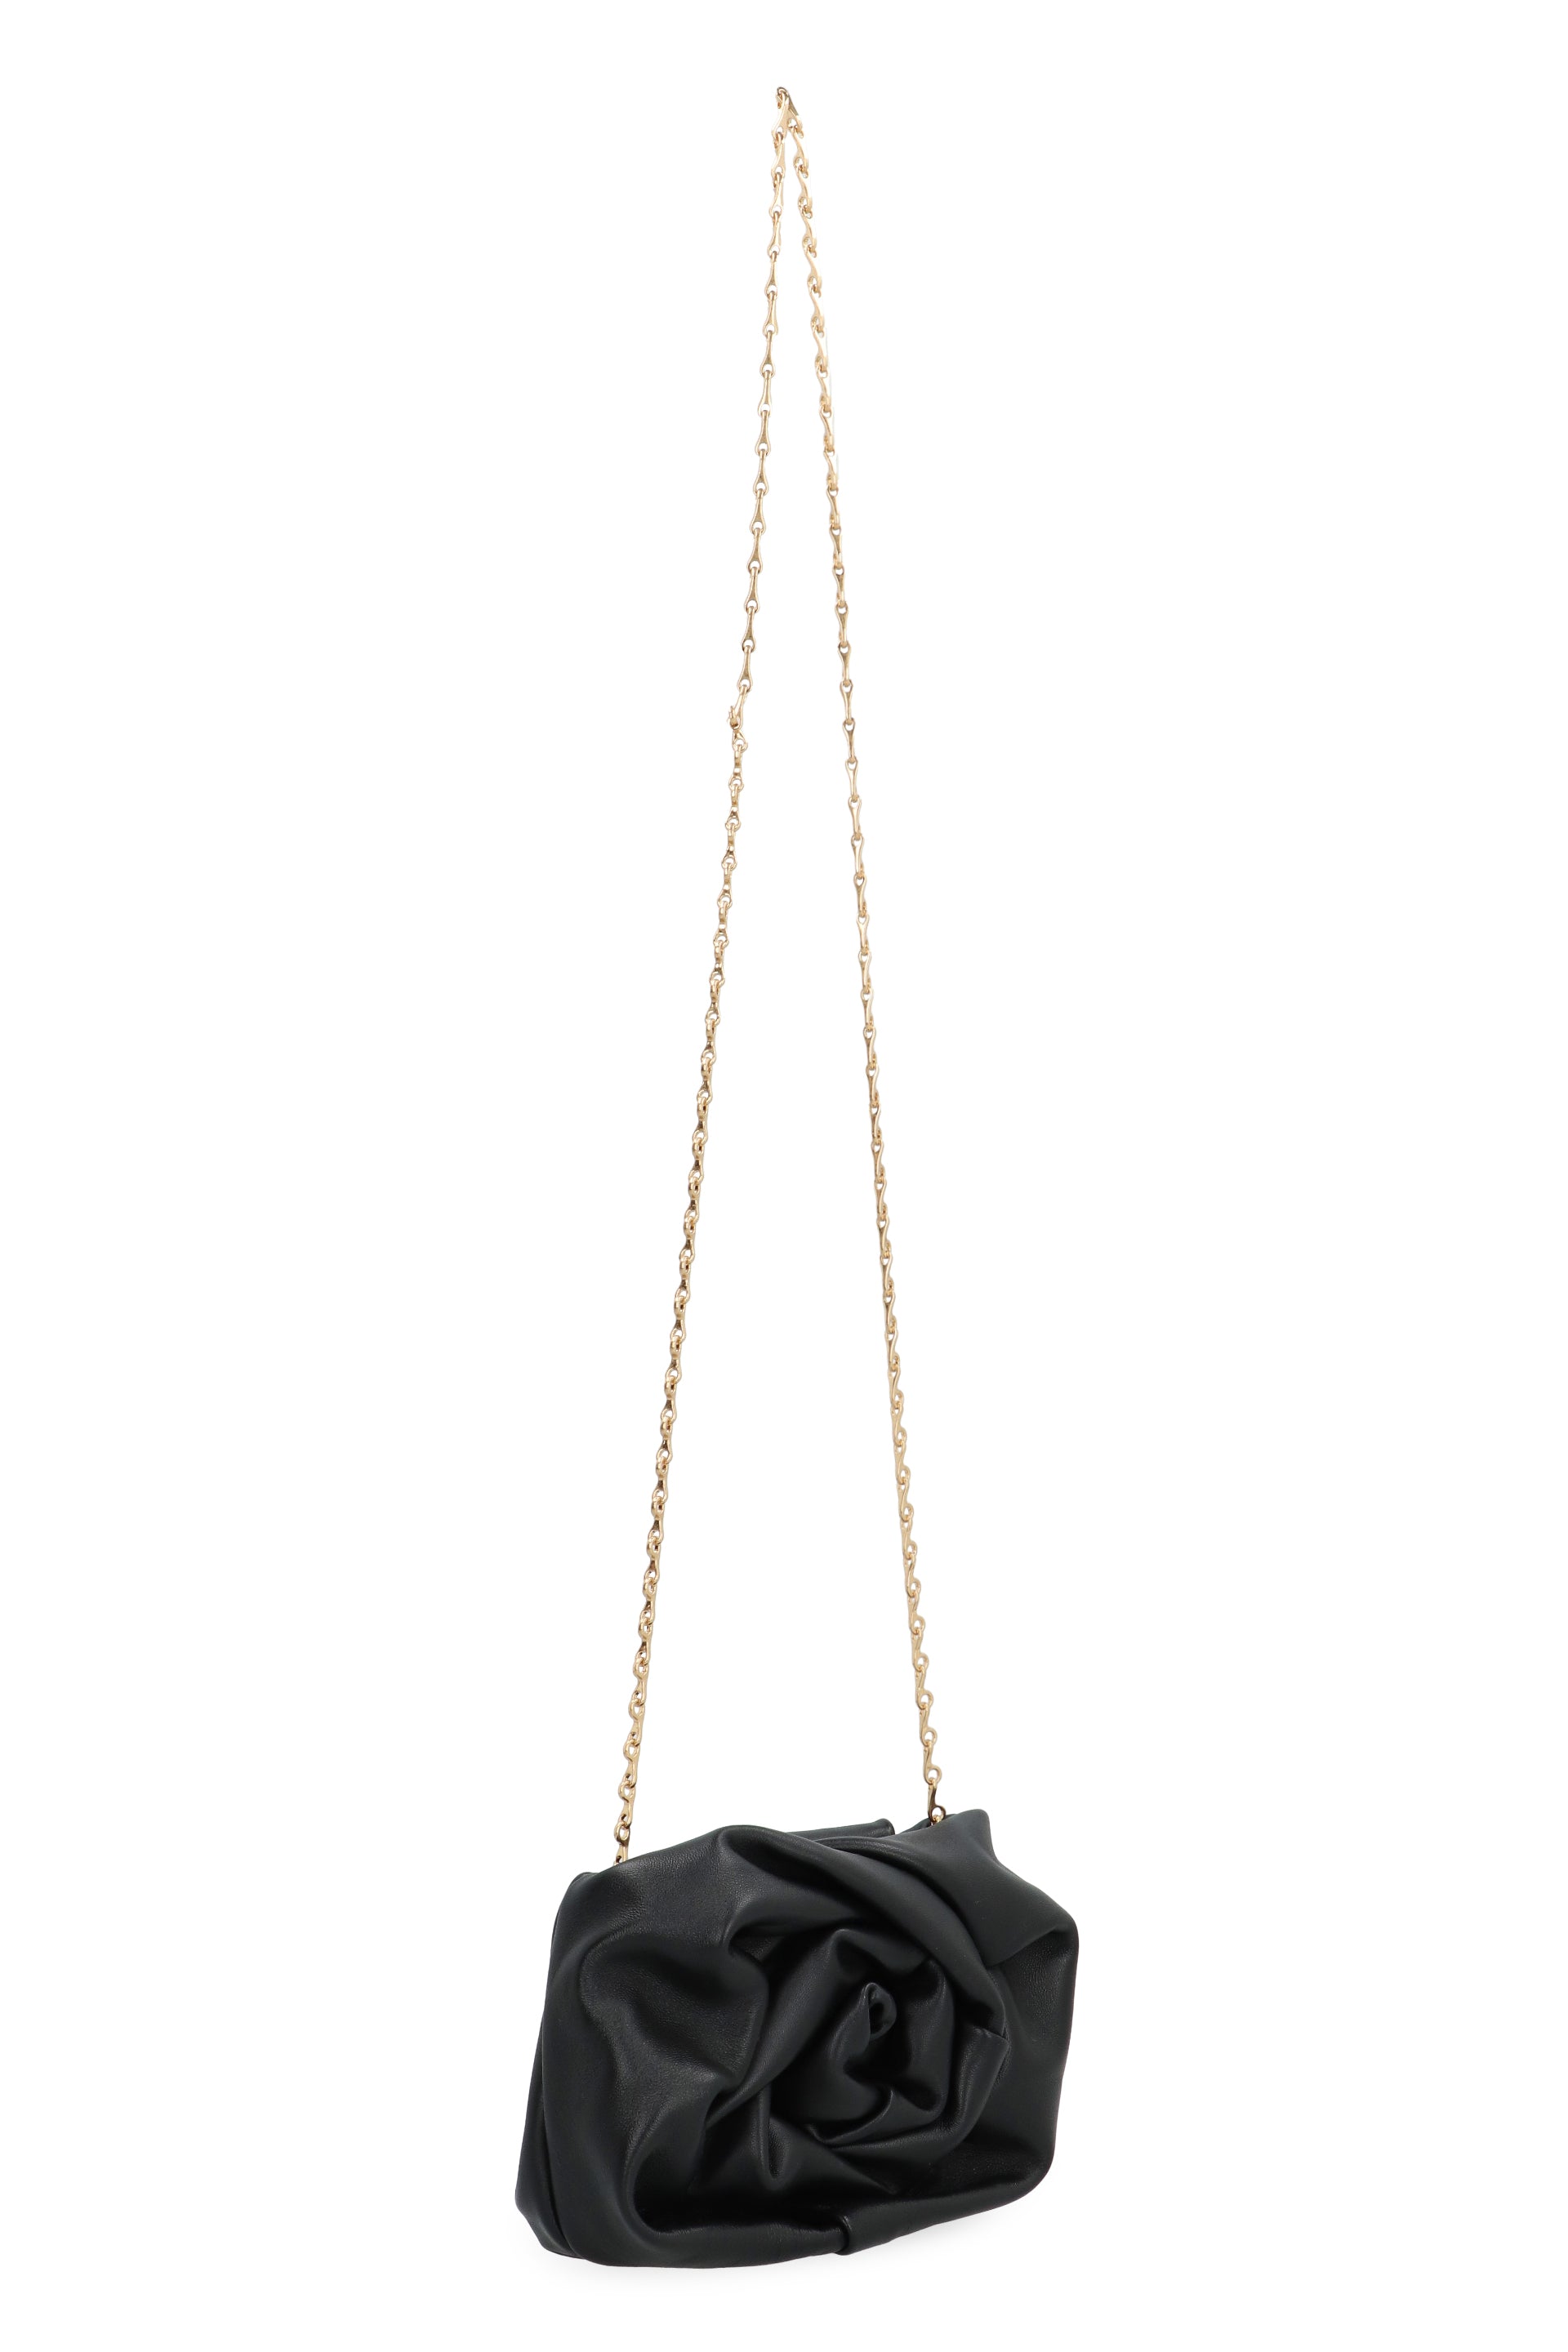 Shop Burberry Elegant Black Leather Clutch For Women